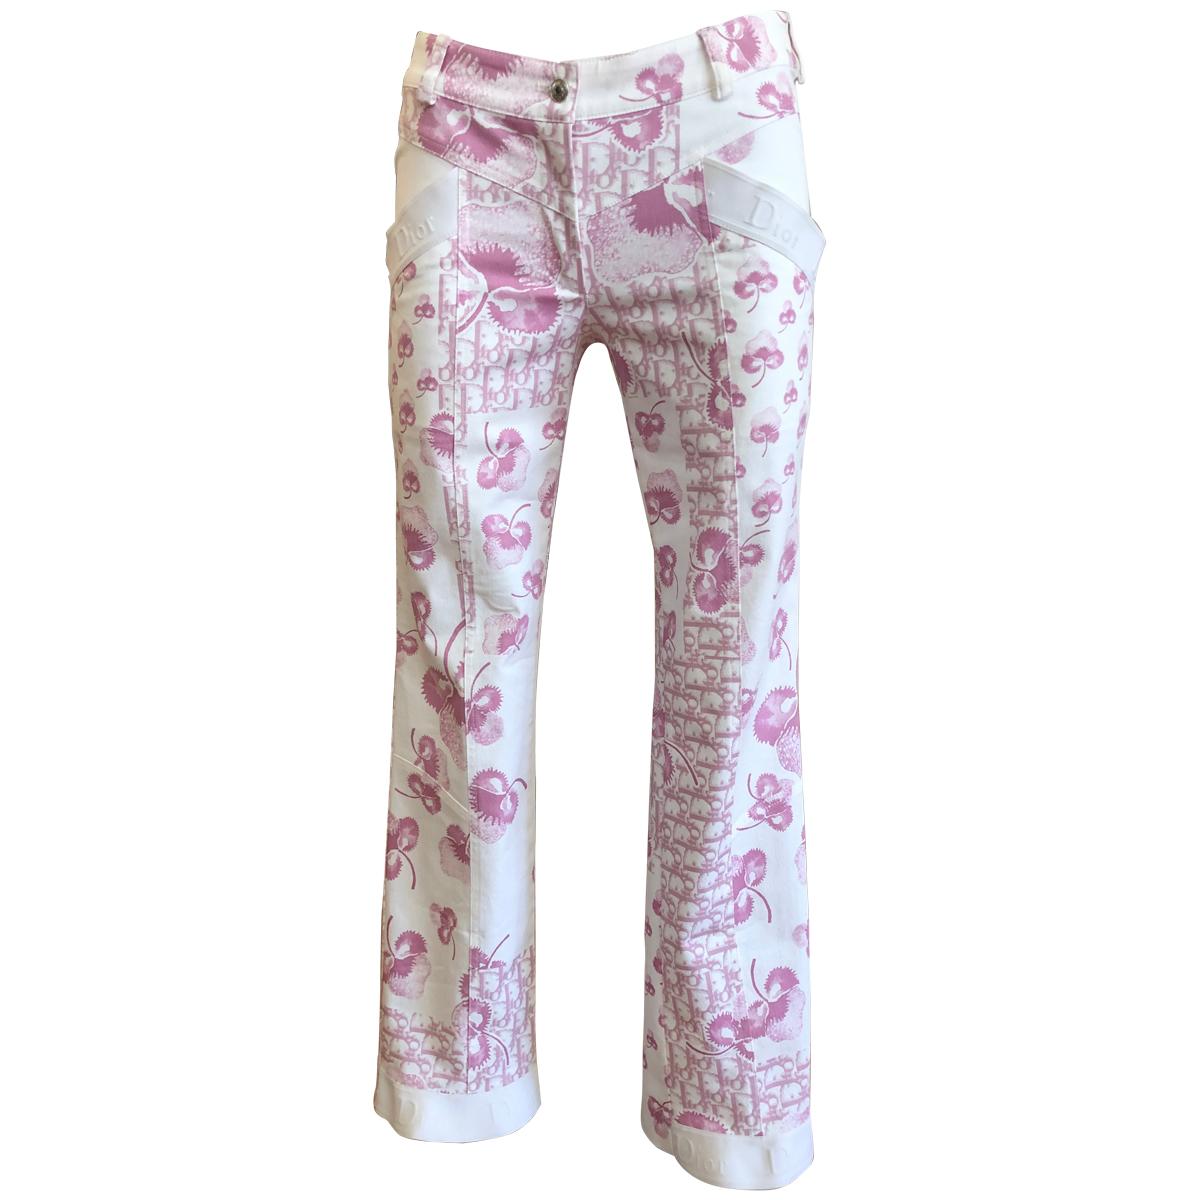 Flower Pants - 18 For Sale on 1stDibs